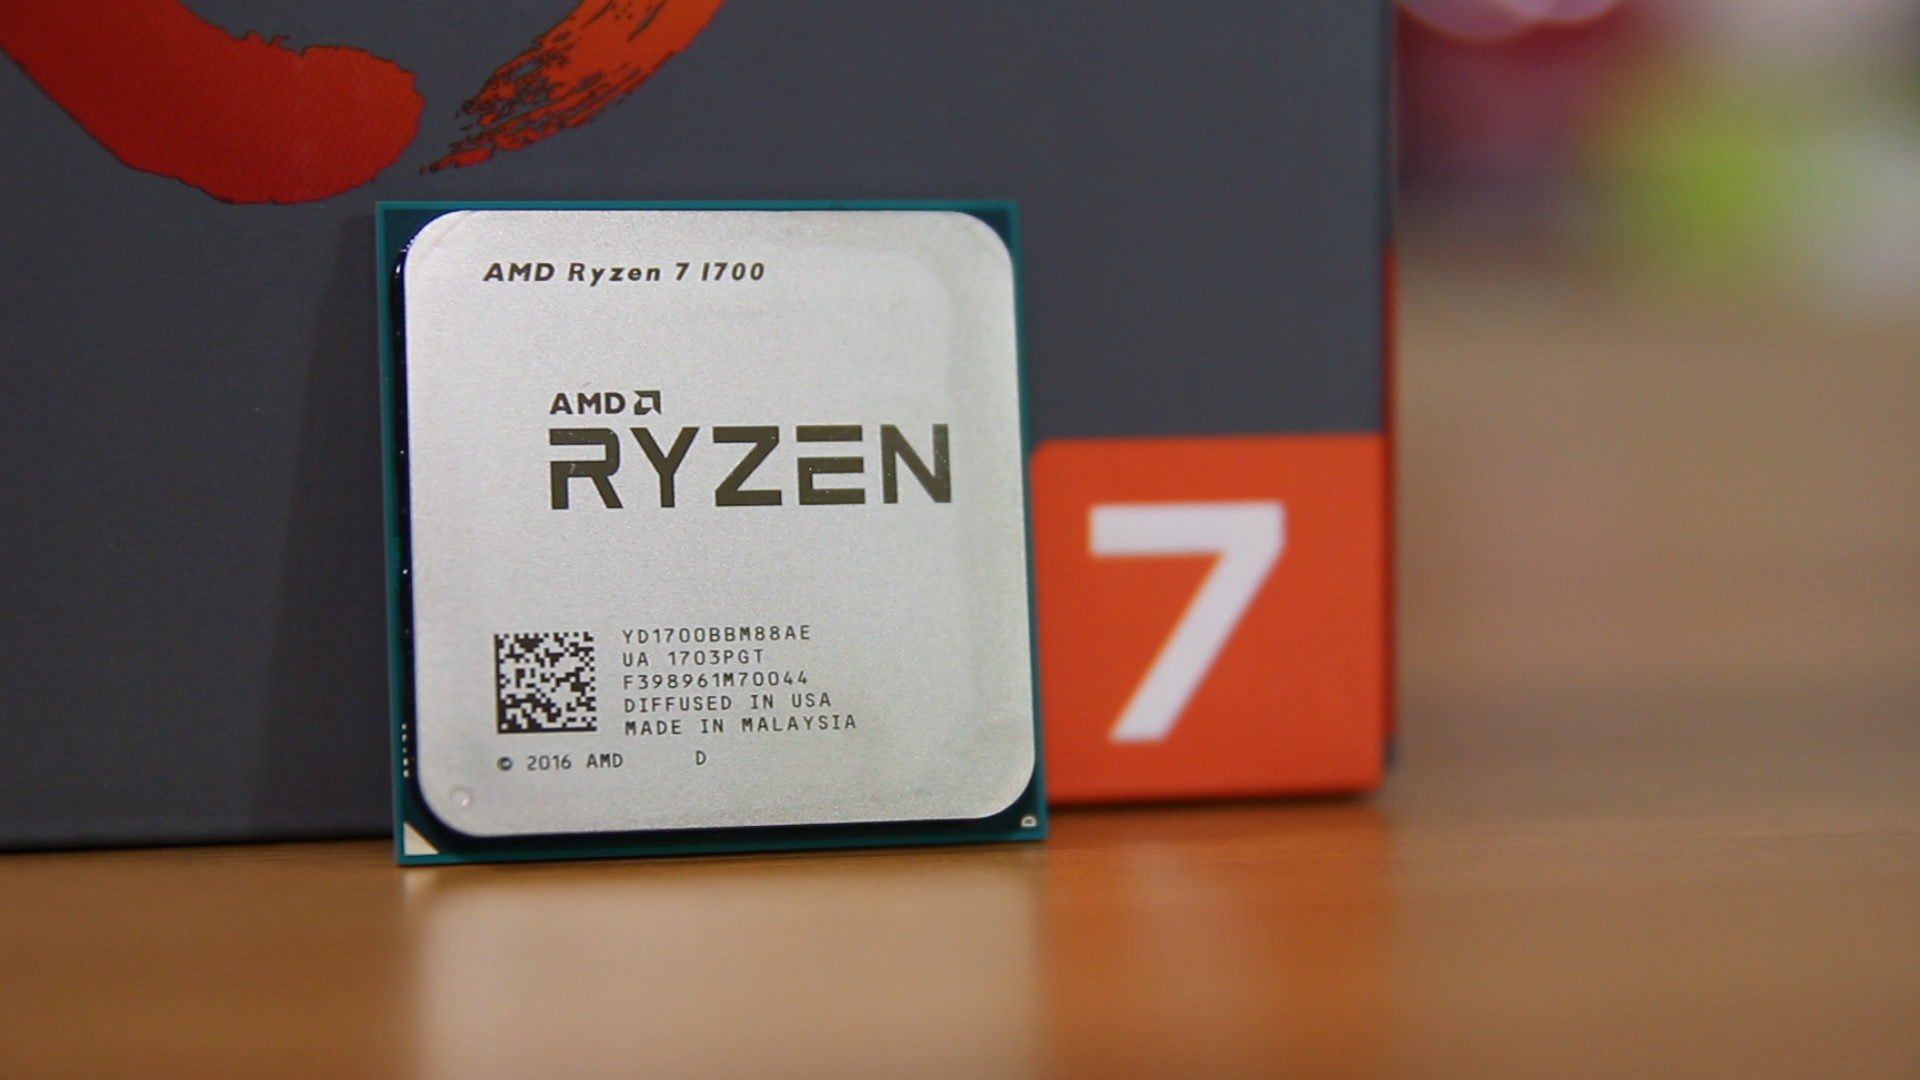 Amd ryzen 7 pro купить. AMD Ryzen 7 1700. AМD Ryzеn 7. Процессор AMD Ryzen 7 1700x. Процессор Ryzen 1800x.